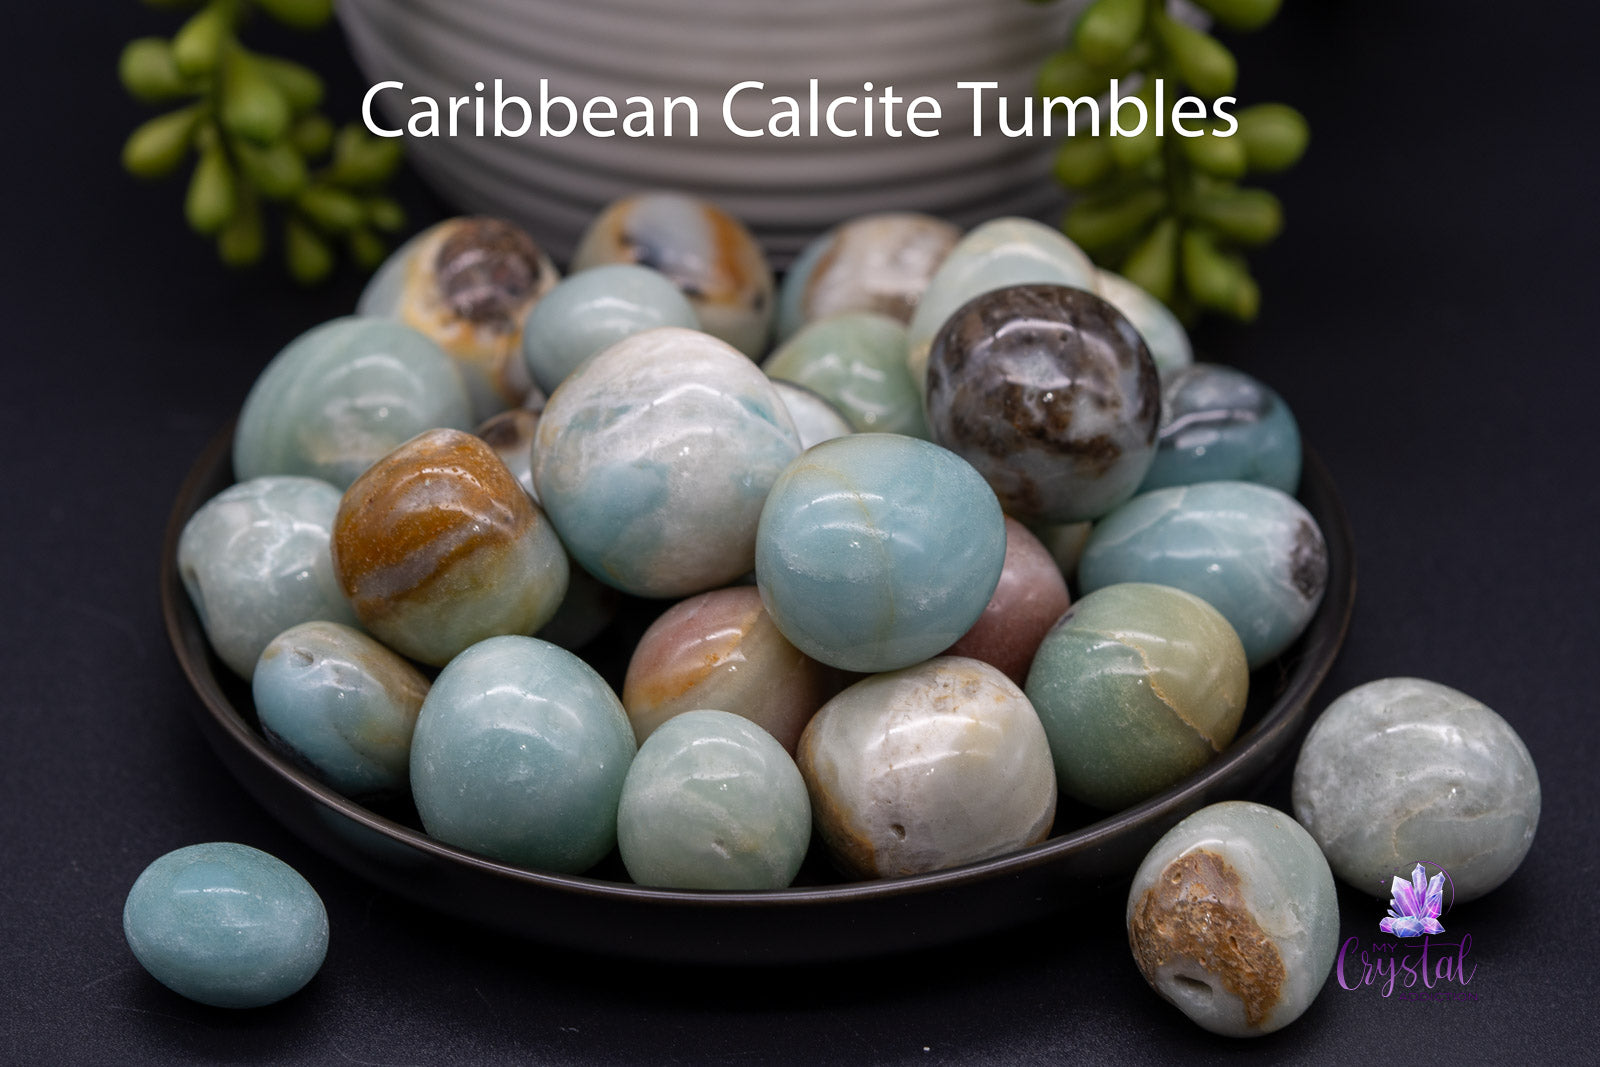 Caribbean Calcite Tumbles - My Crystal Addiction